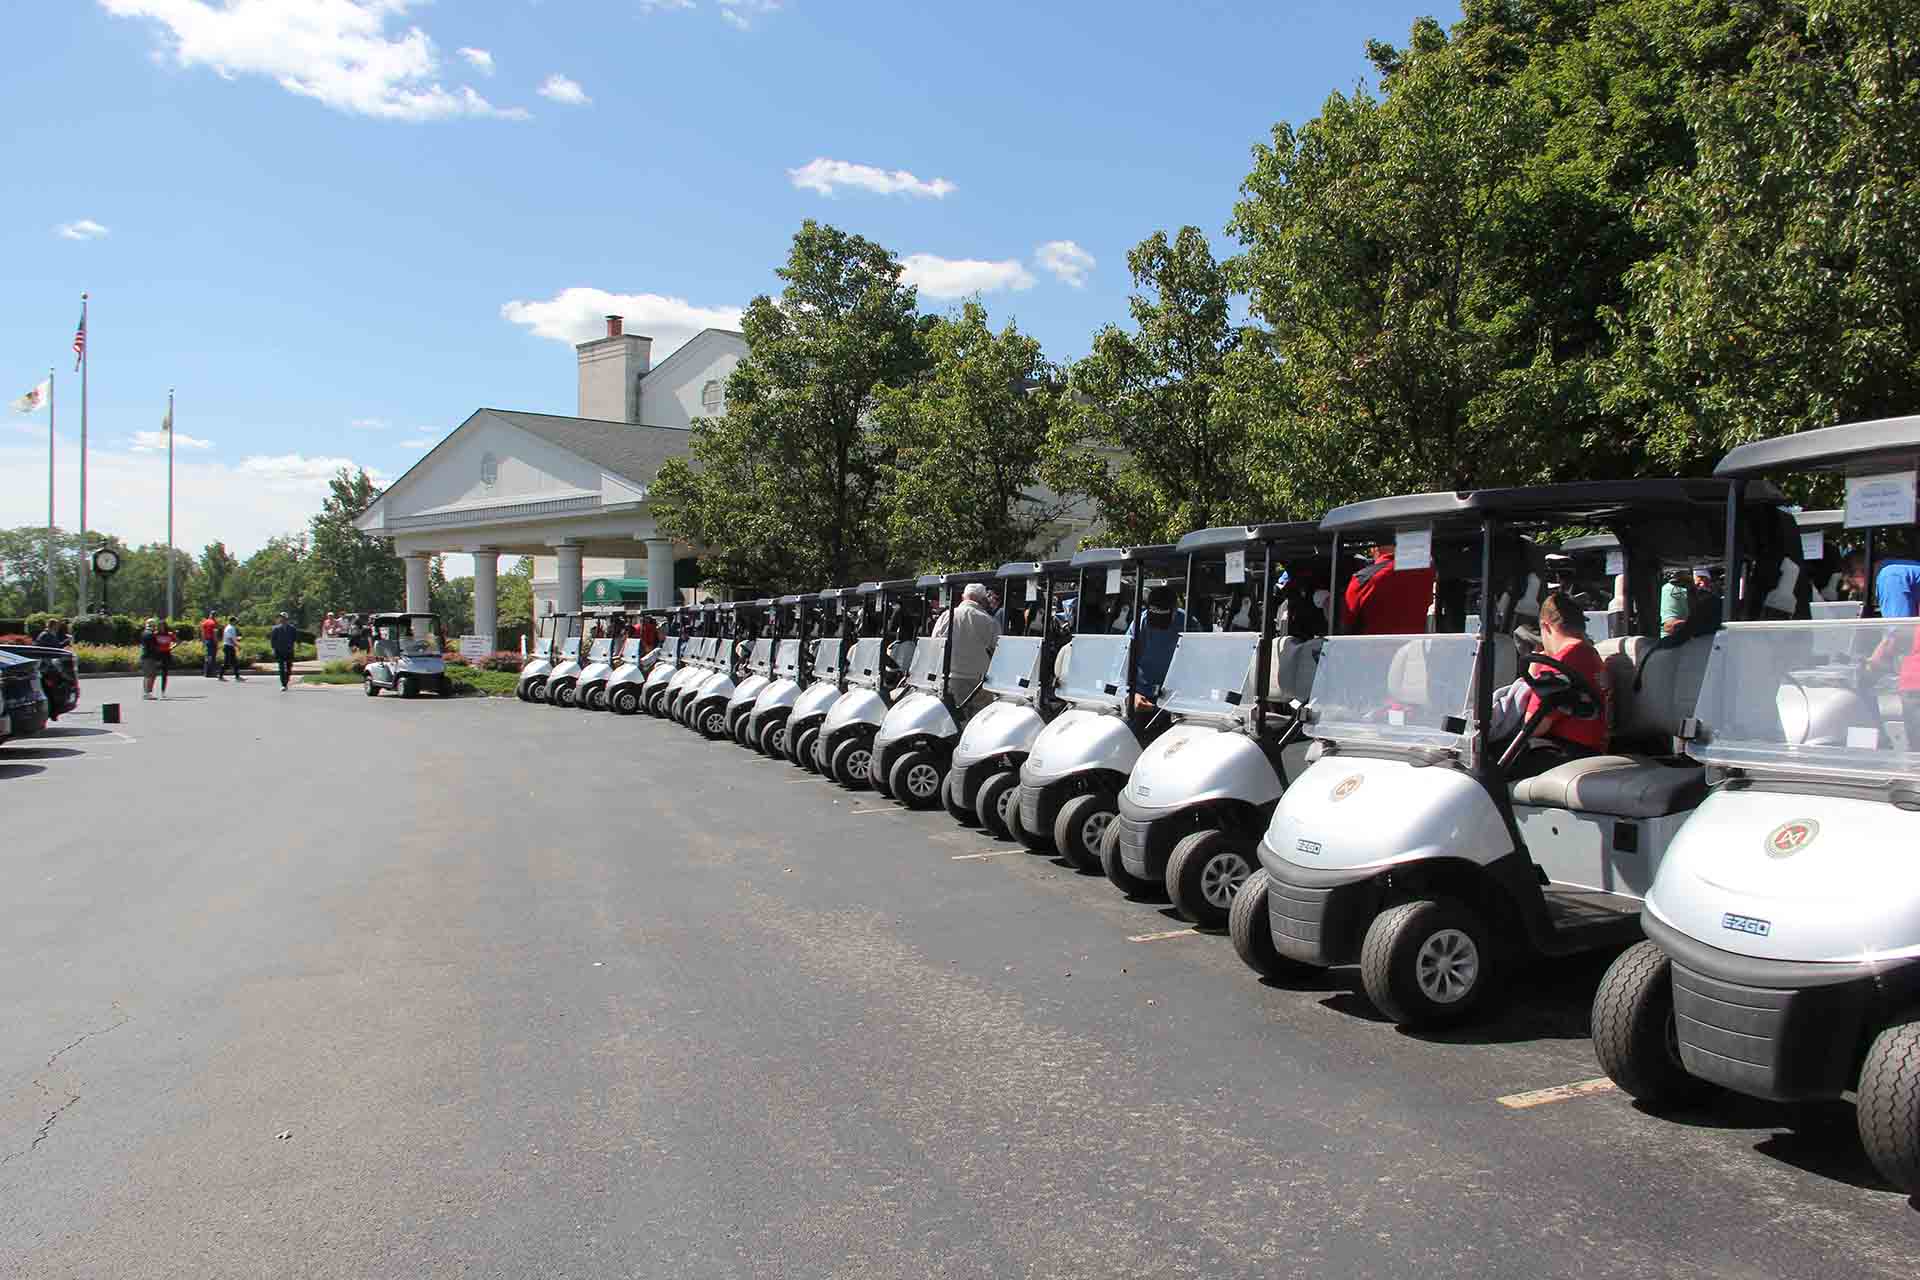 2022-Endowment-Golf-Classic-long-line-of-golf-carts